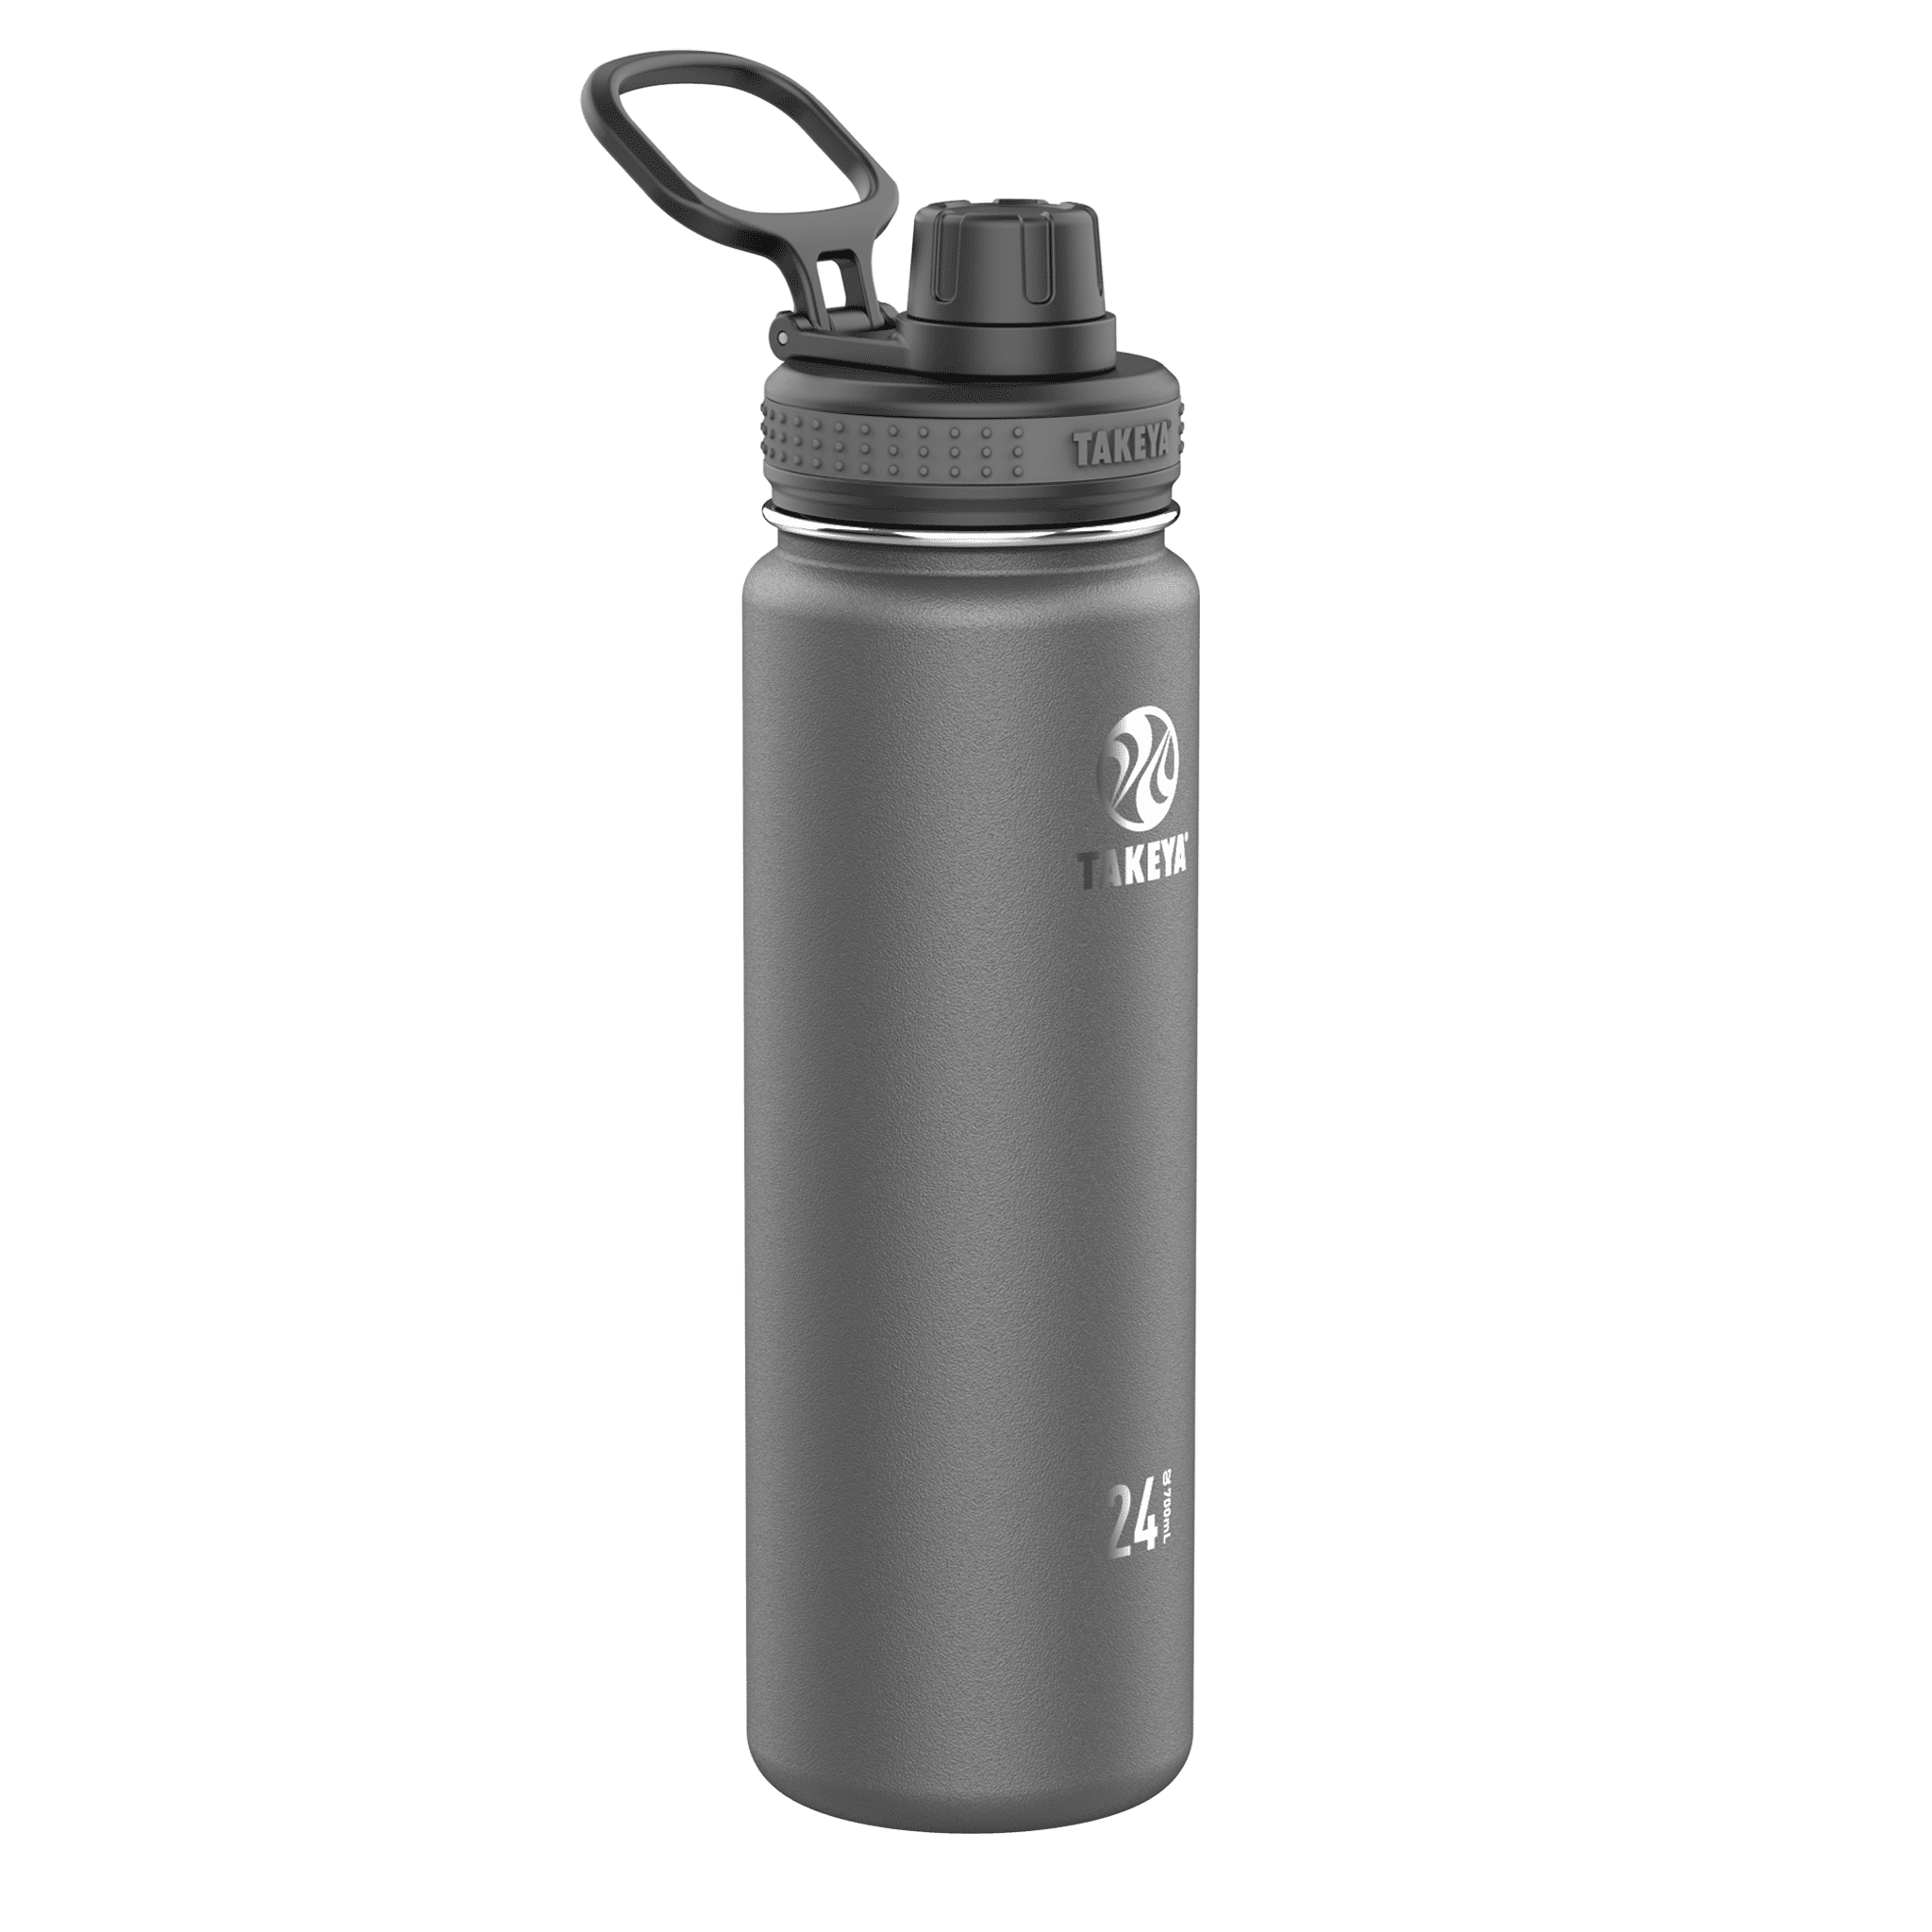 Takeya  Originals Vacuum-Insulated Stainless-Steel Water Bottle 24oz 2 Pack 